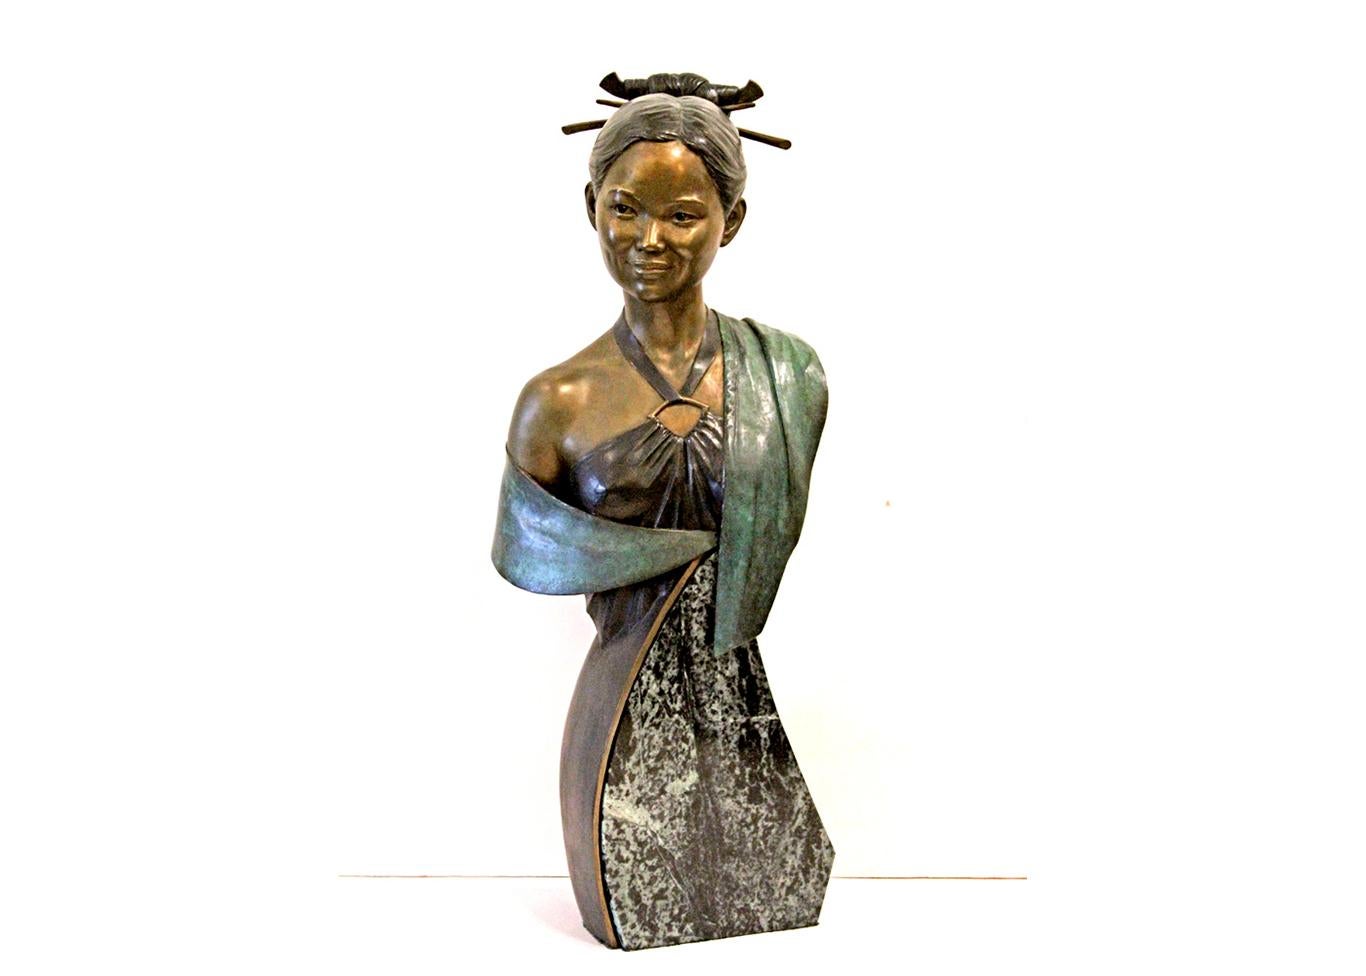 Pardell, Christopher Figurative Sculpture - Beautiful Lady